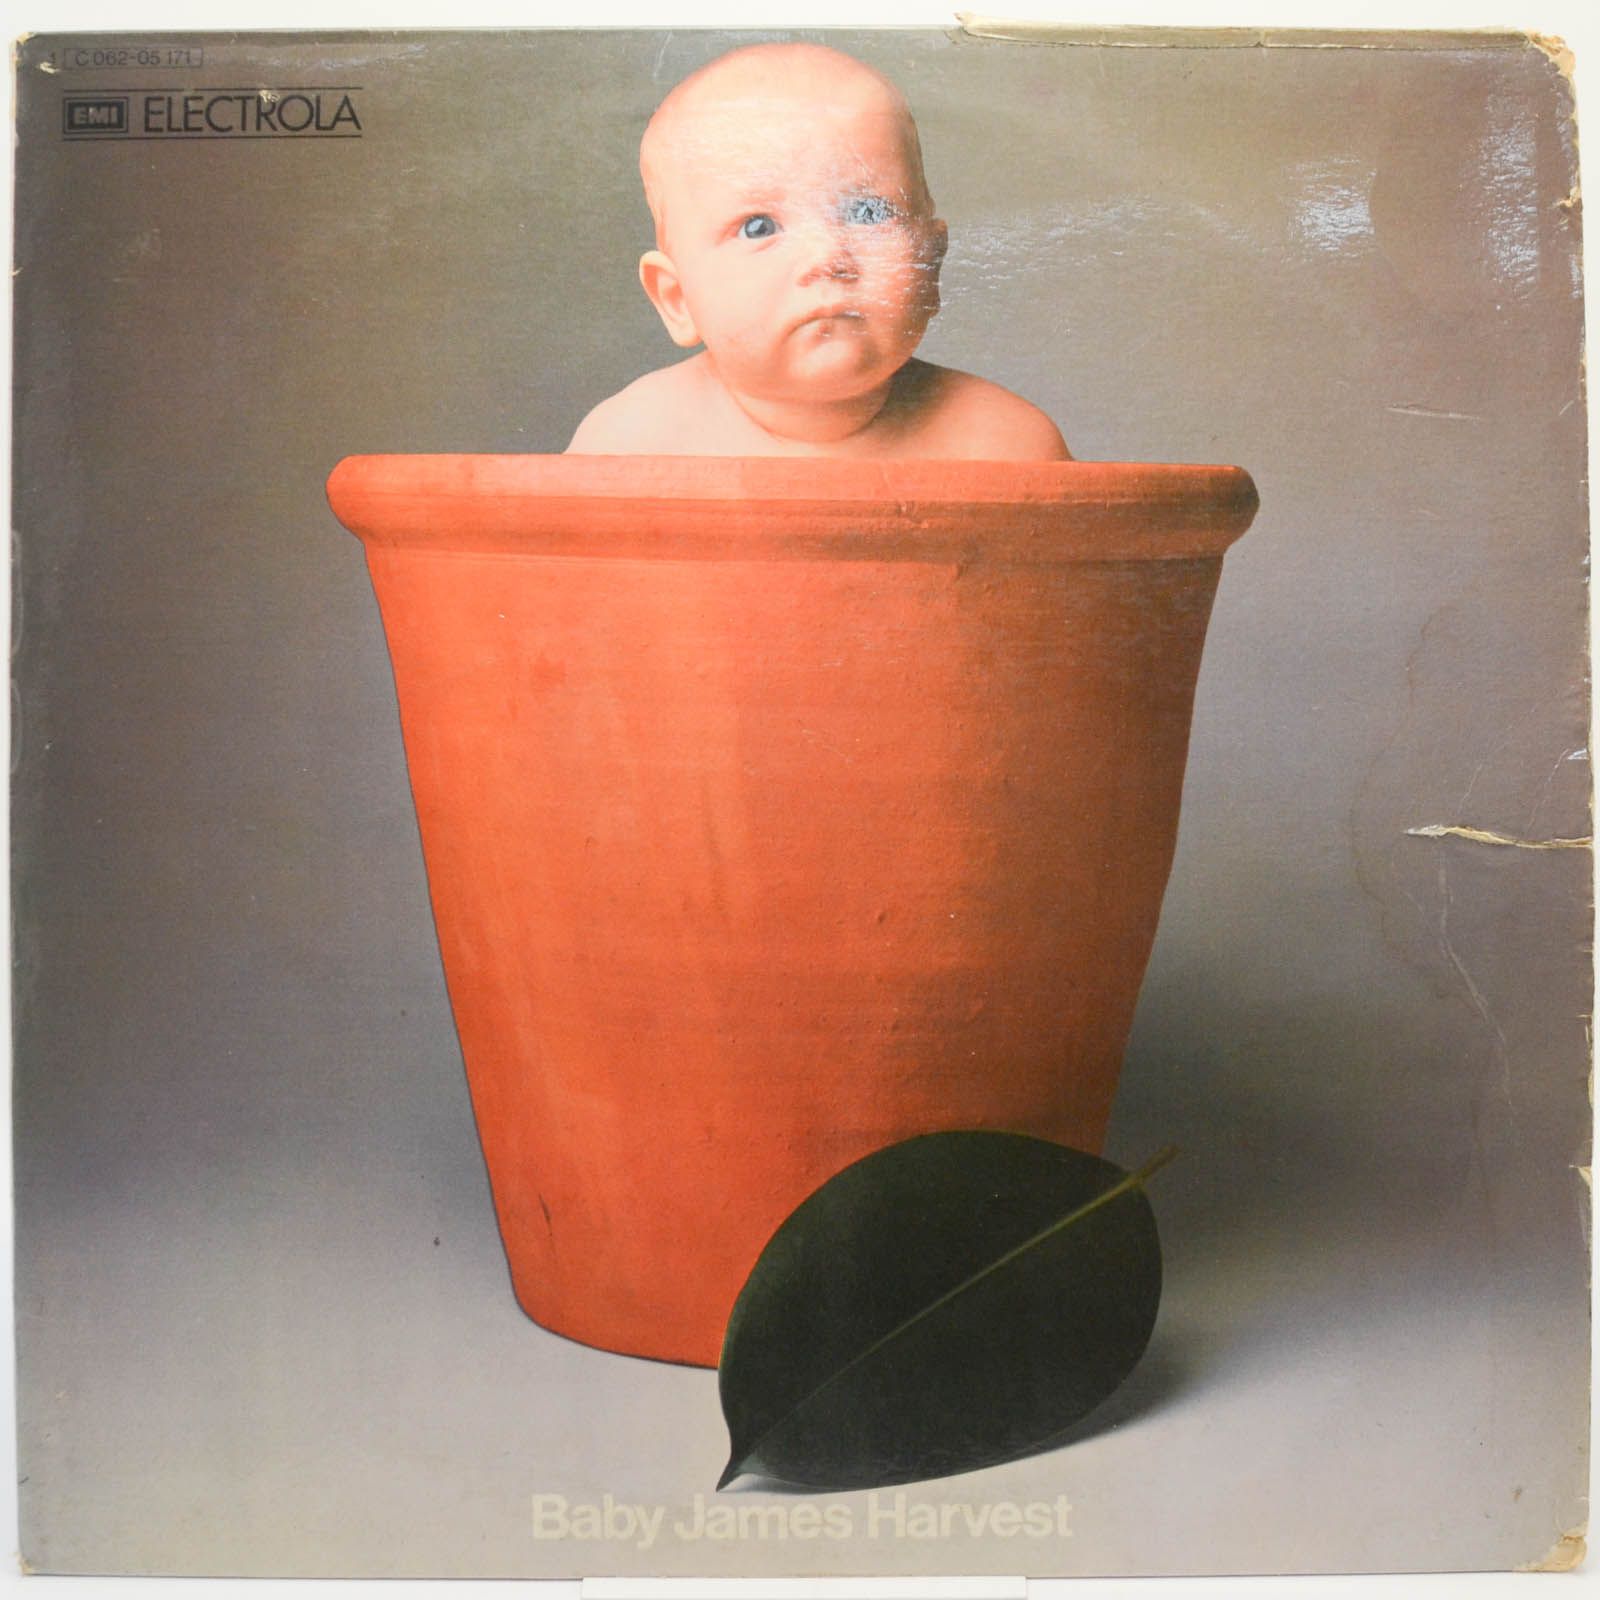 Barclay James Harvest — Baby James Harvest, 1972